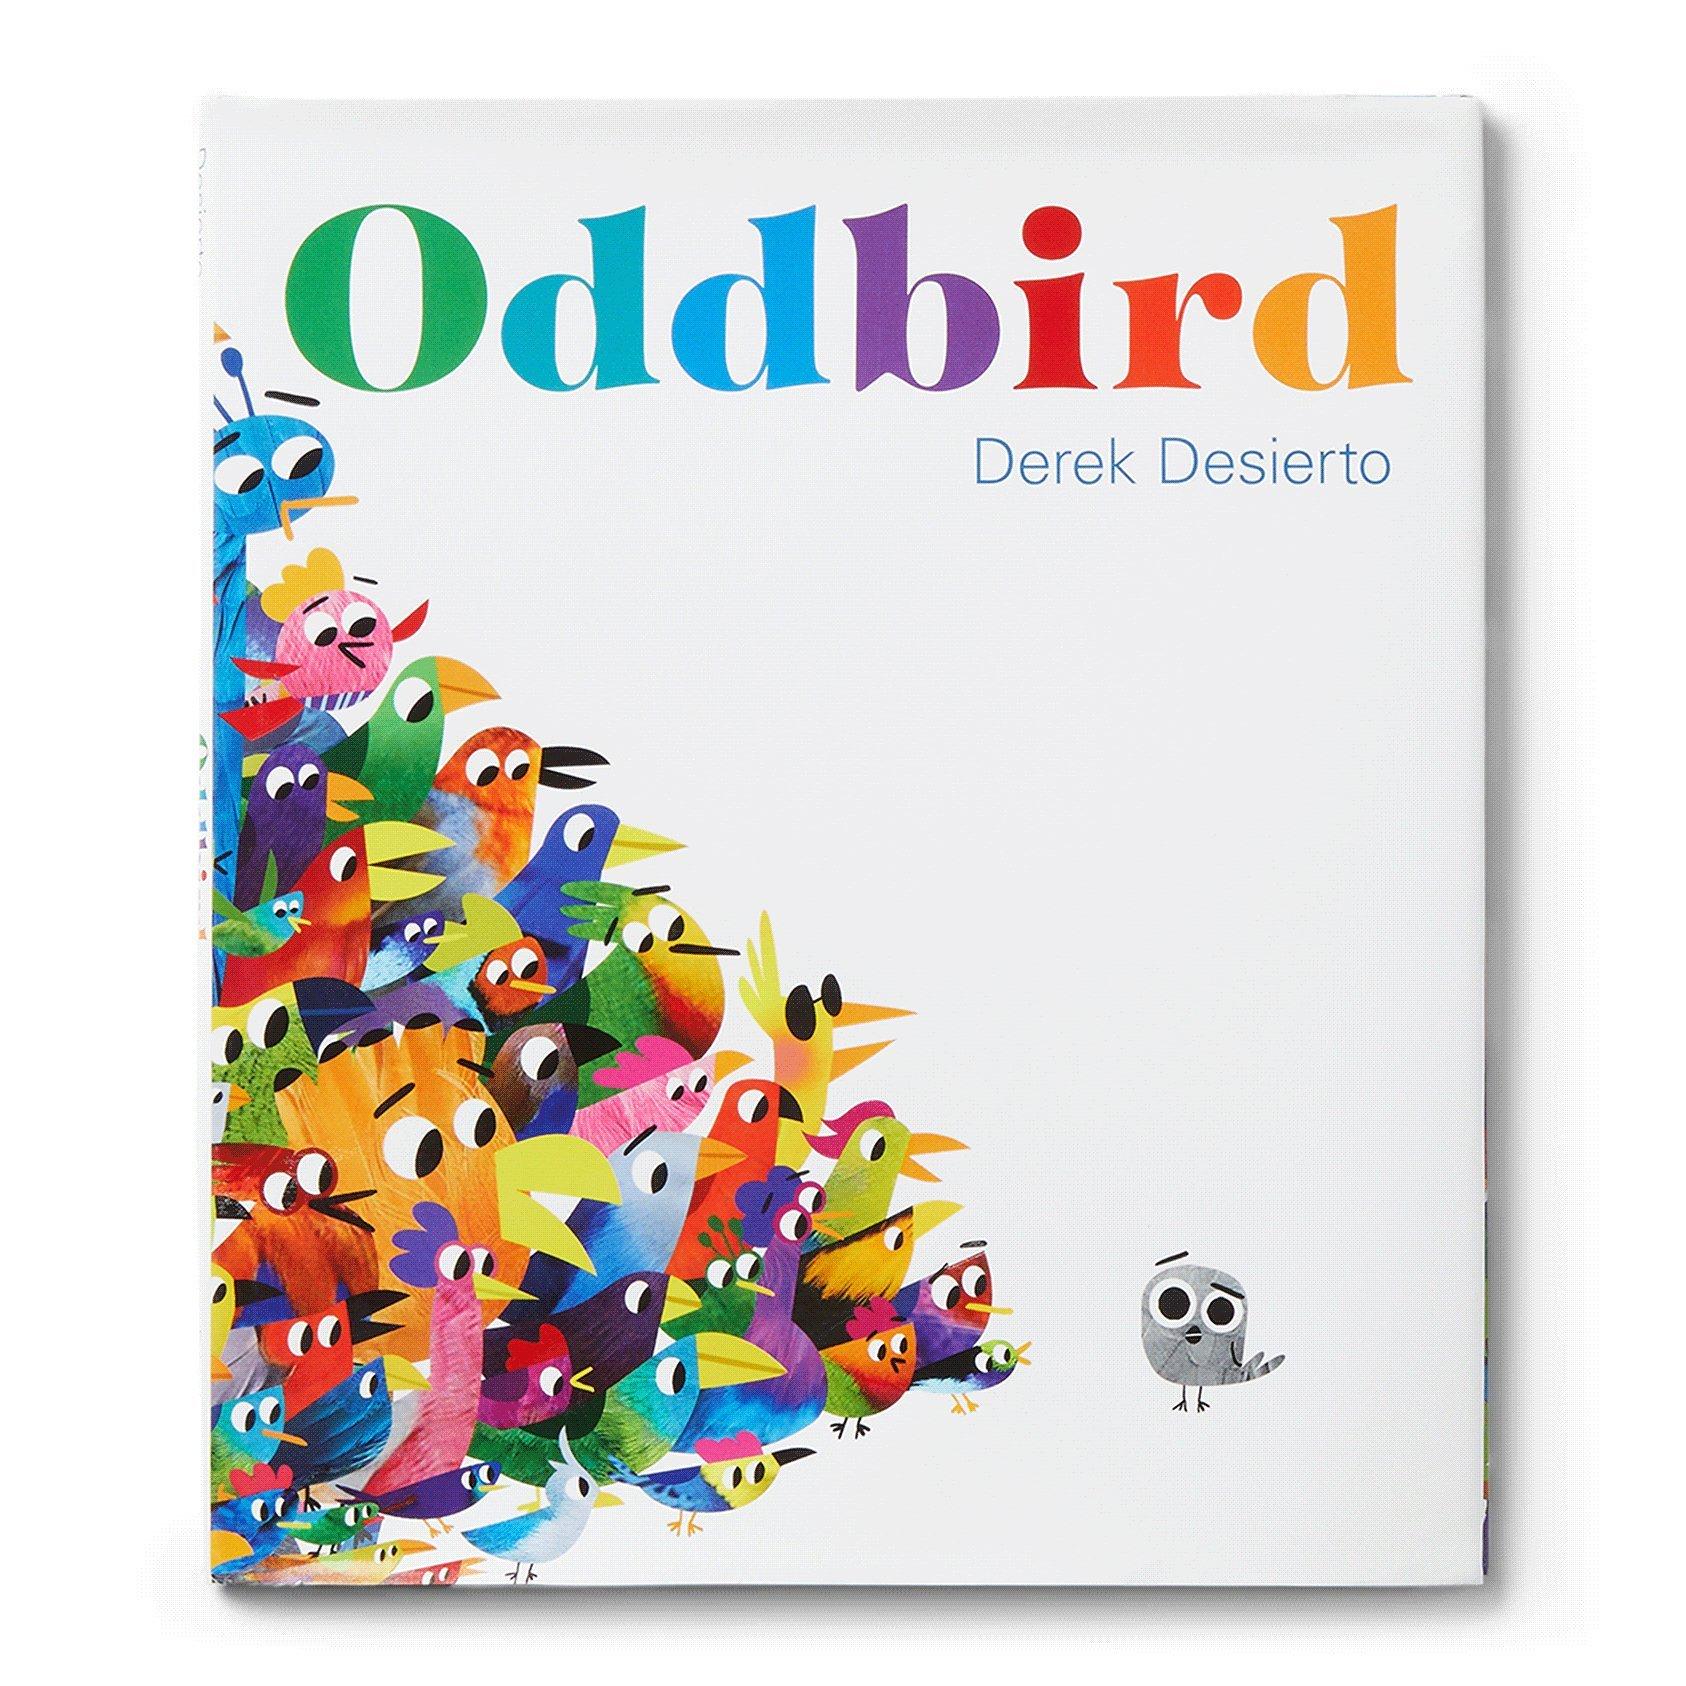 Oddbird Book